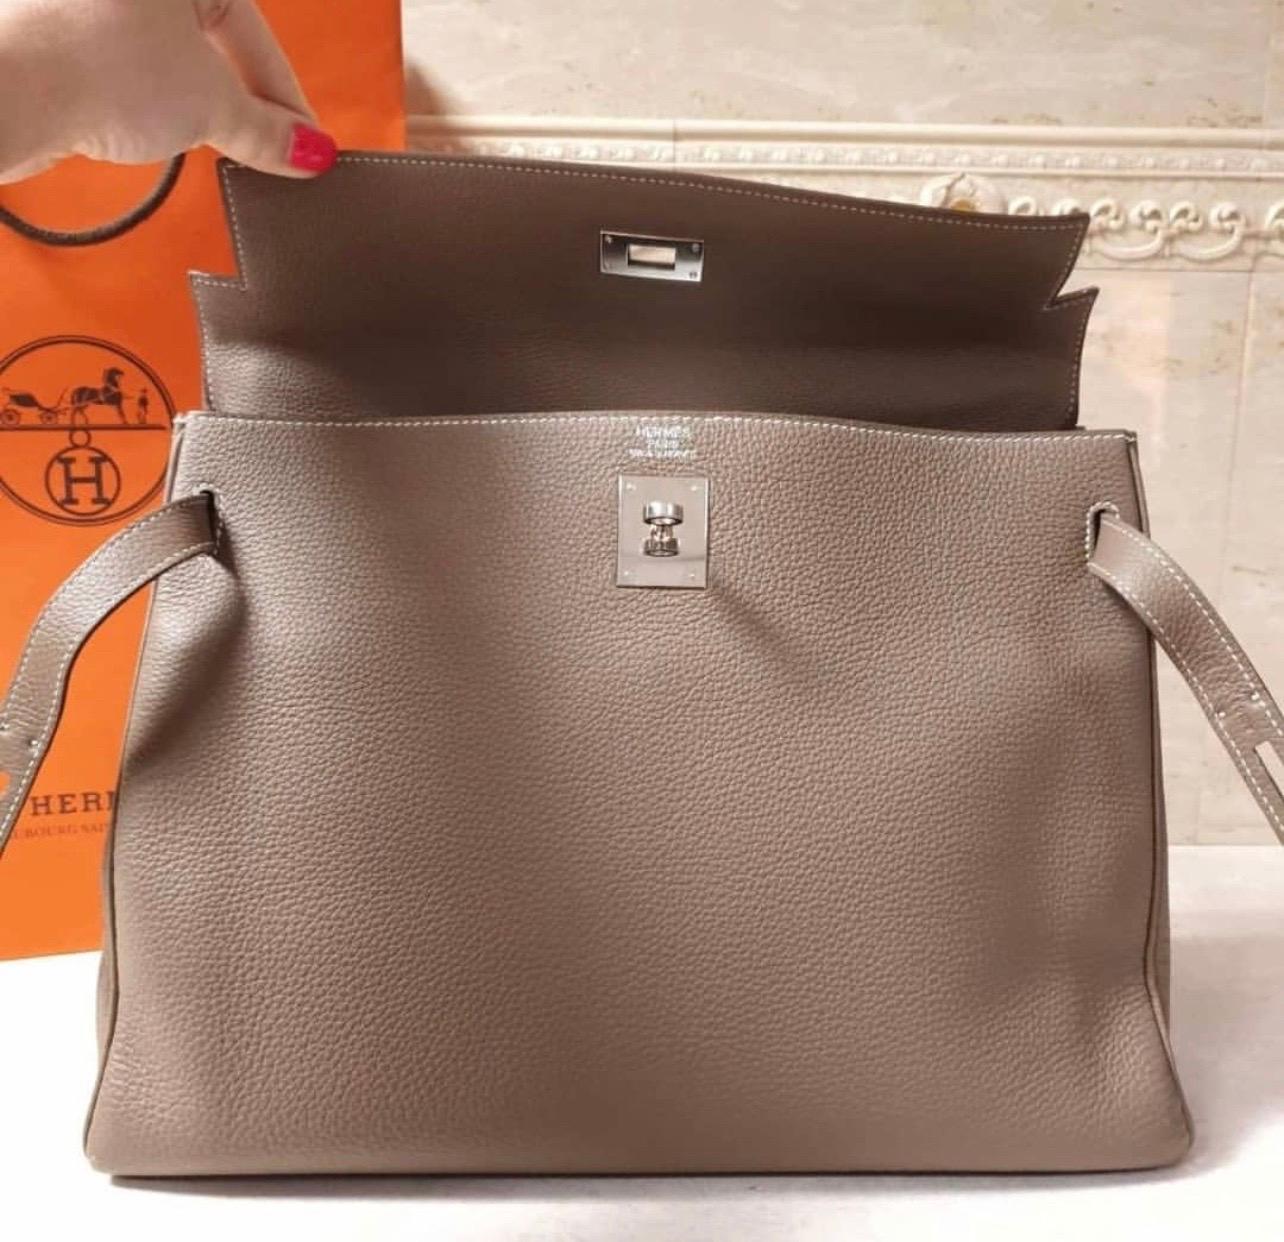 Hermes Kelly 35 Leather Handbag. 4